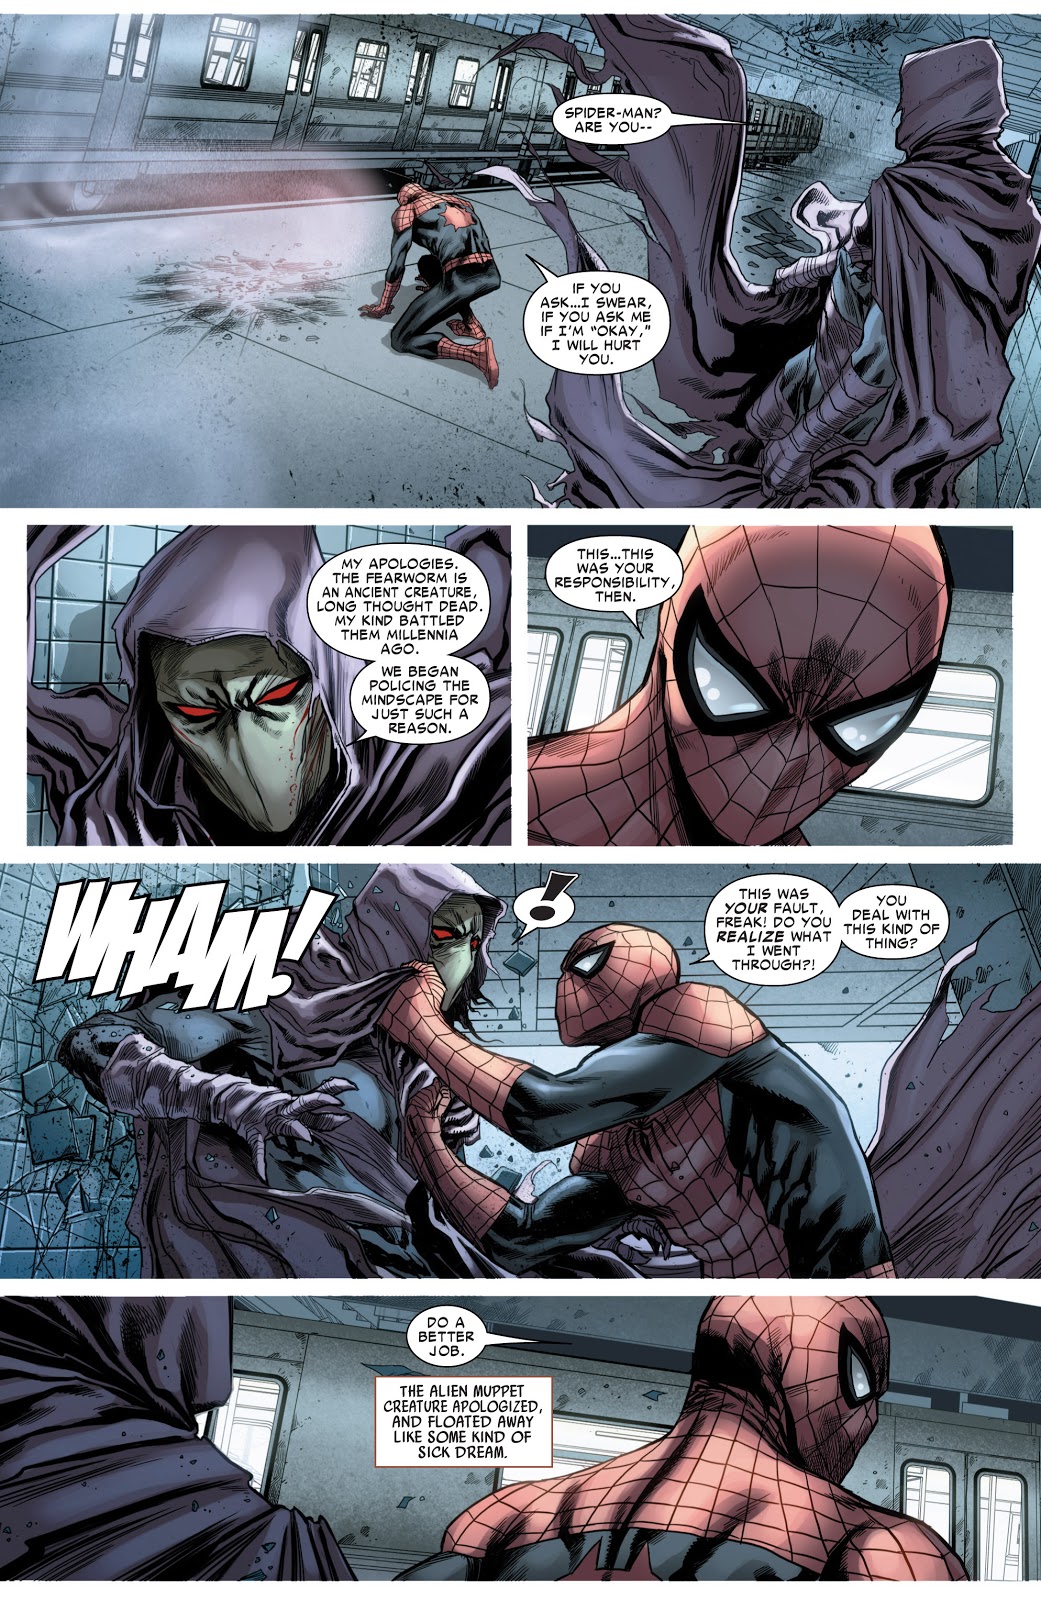 Superior Spider-Man Defeats A Fear-Worm